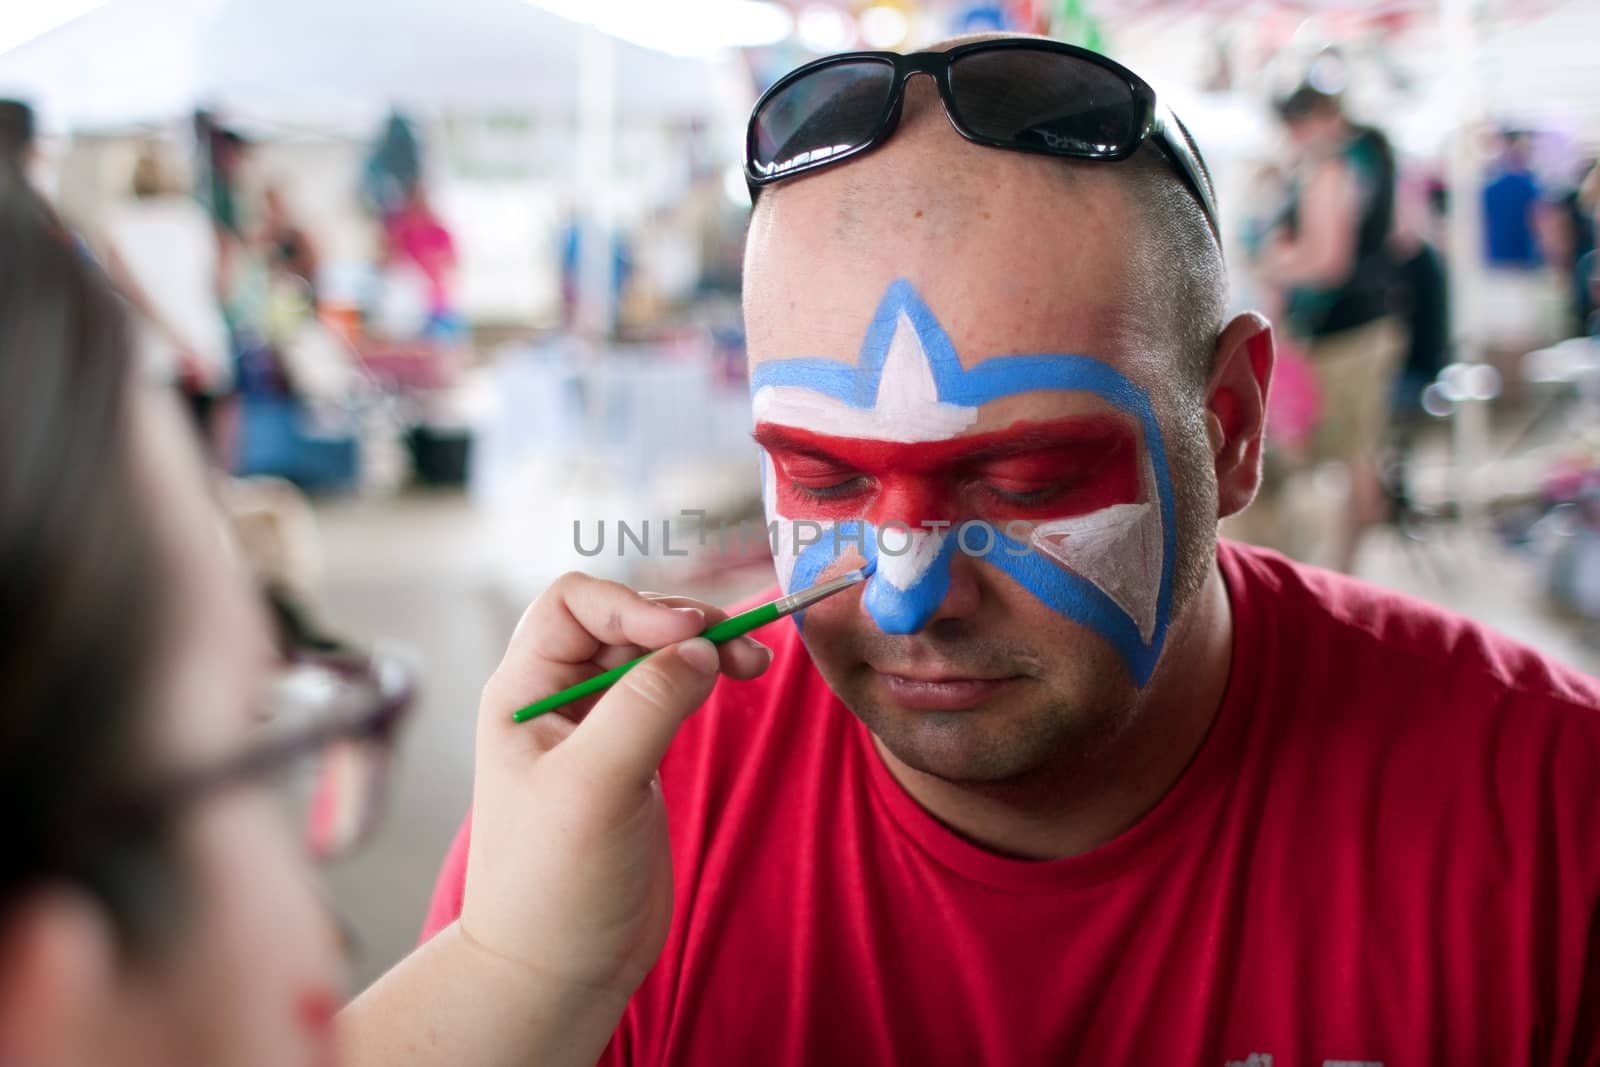 Man Gets Lafleur Symbol Painted On Face At Festival by BluIz60